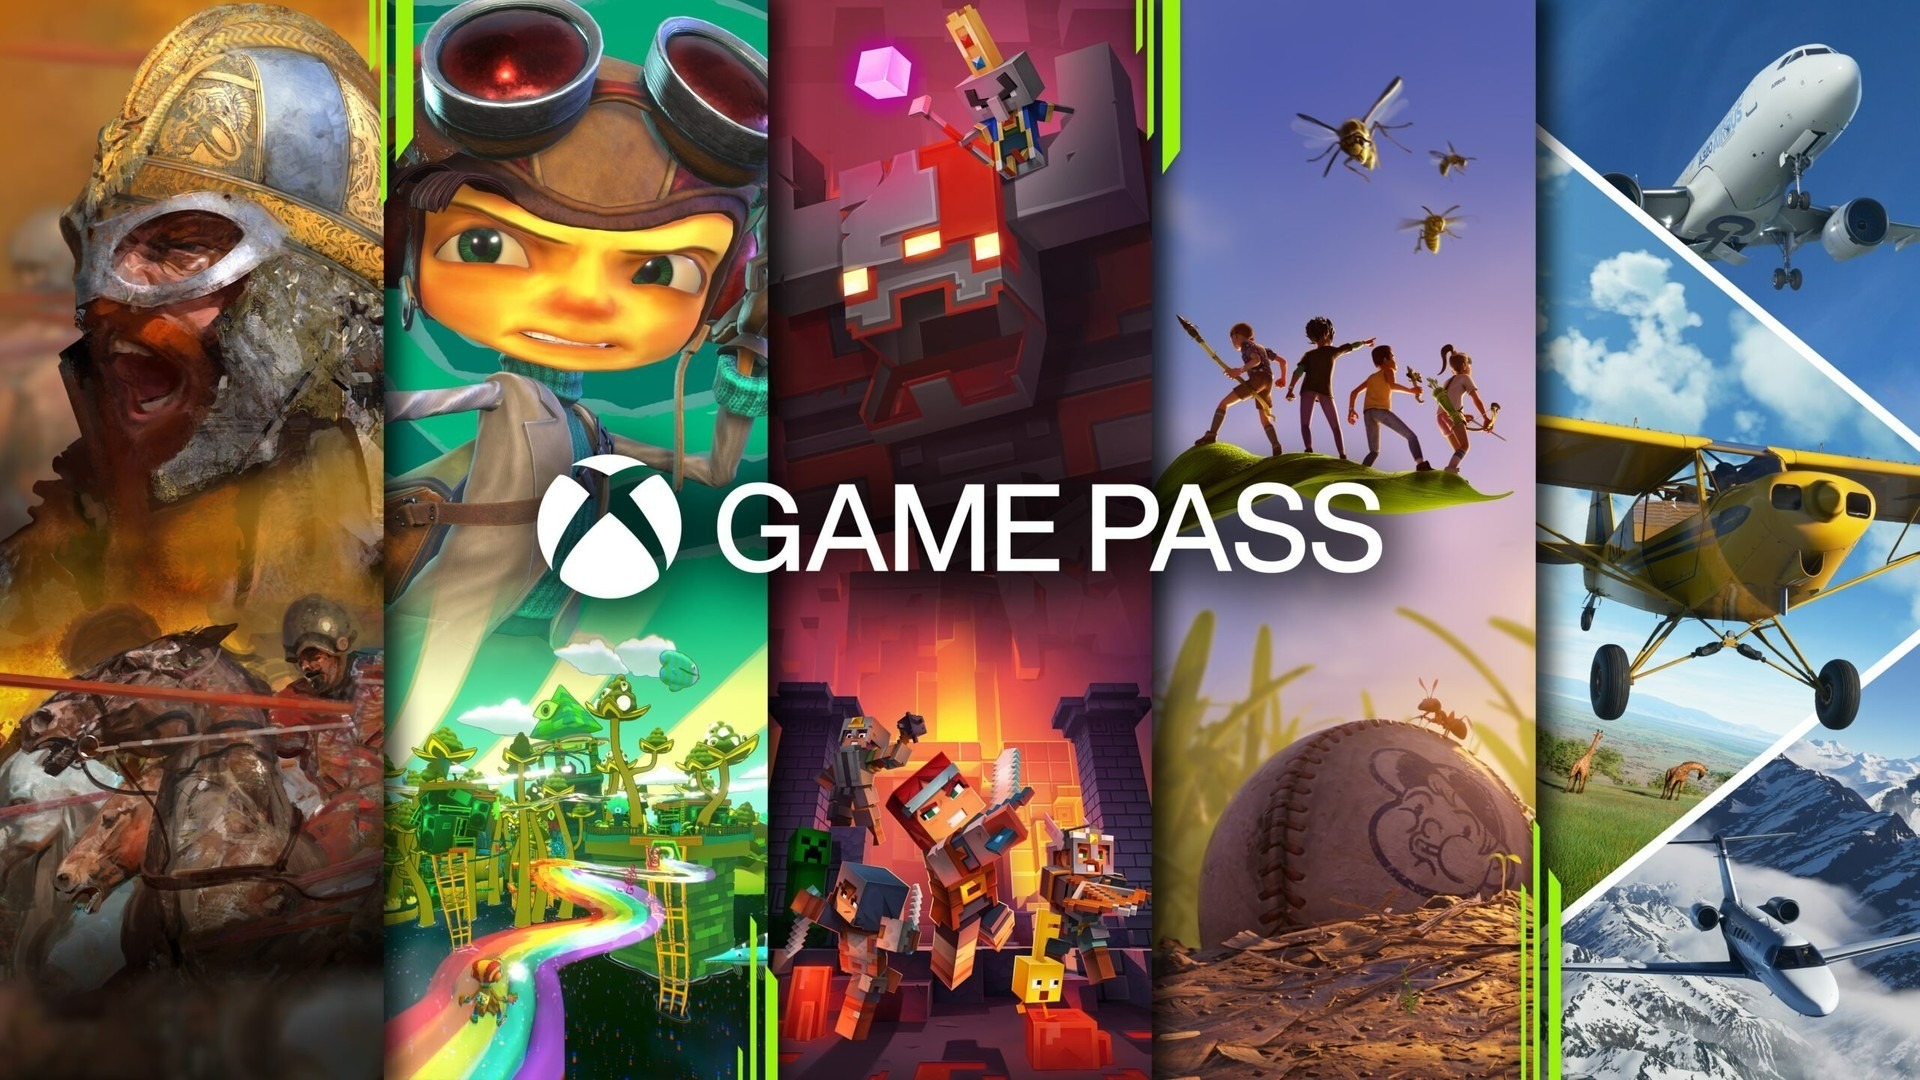 Microsoft encerra oferta do Game Pass Ultimate por 5 reais - Critical Hits